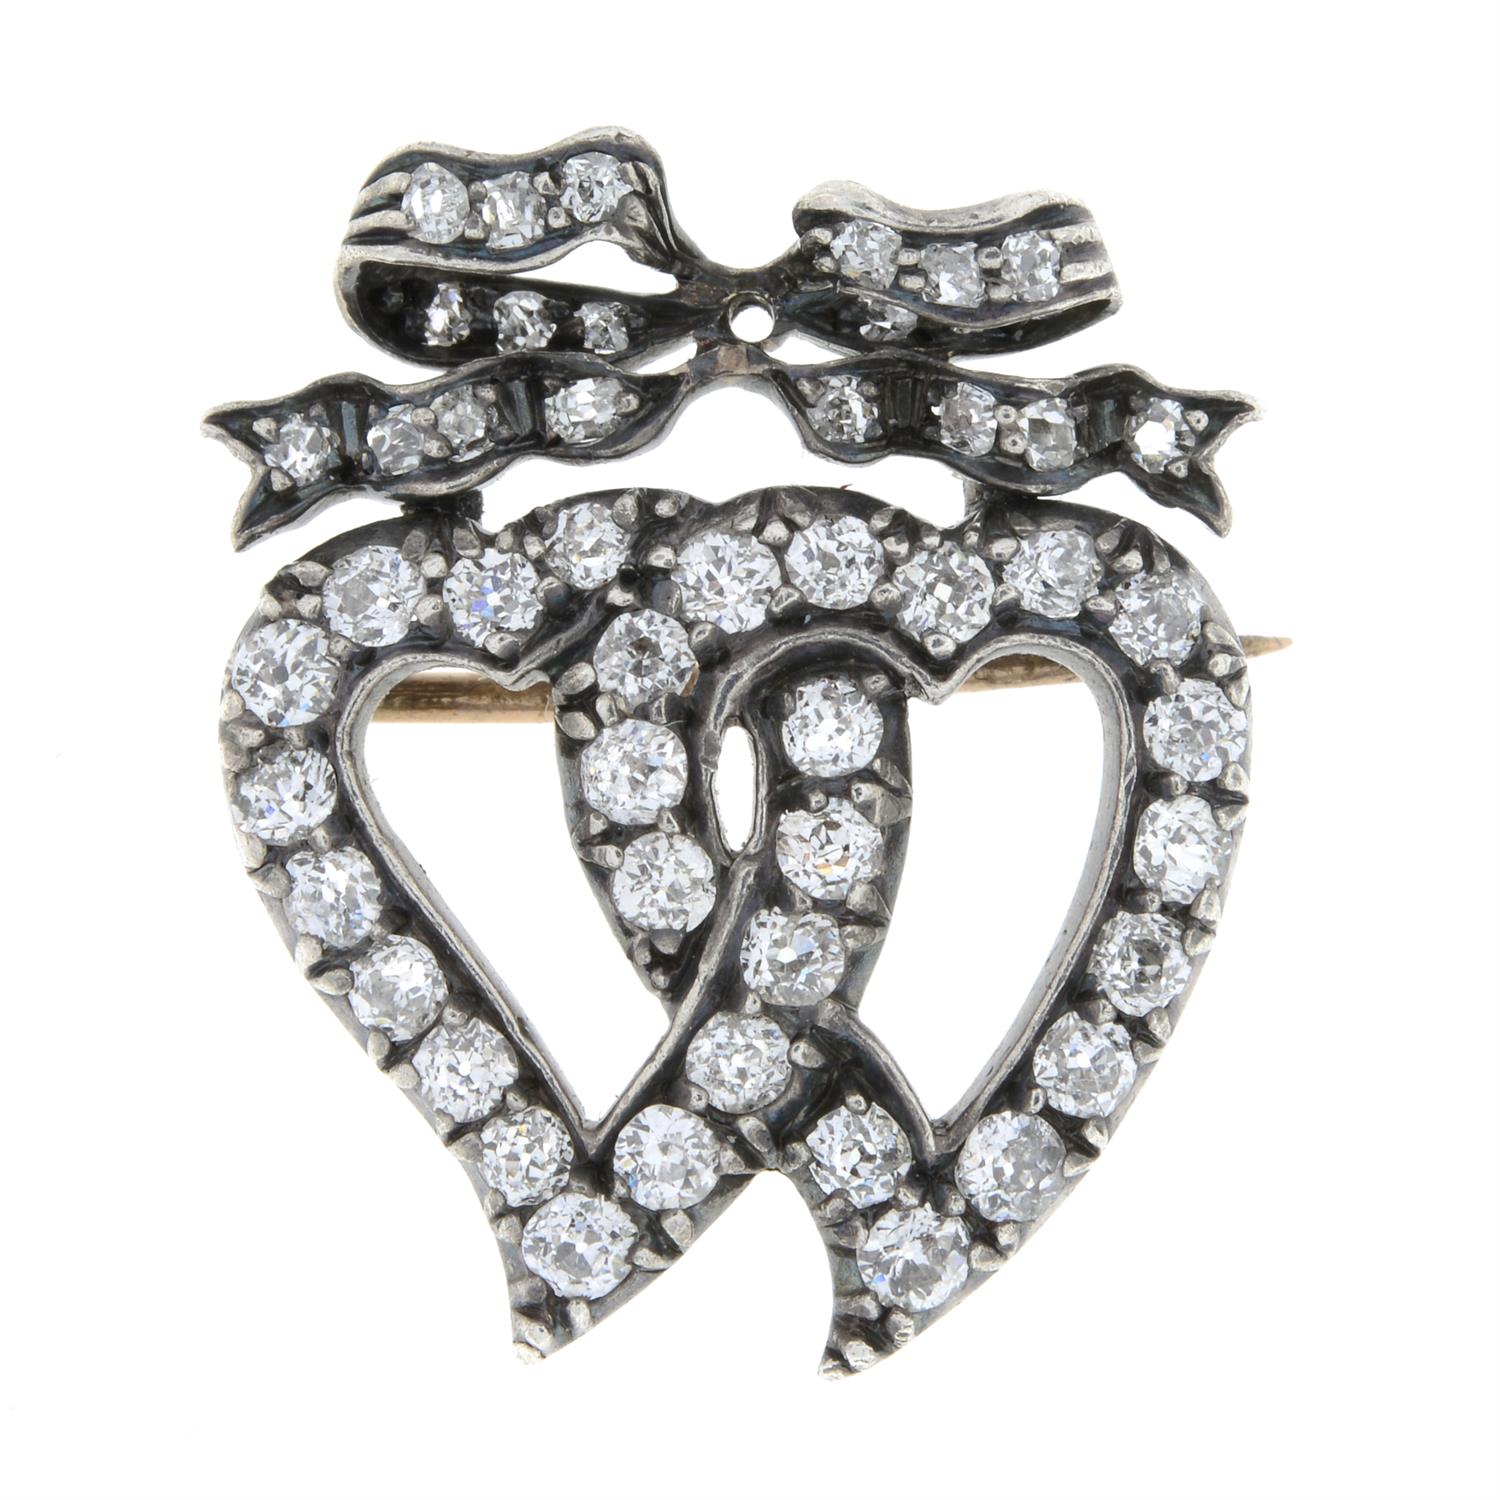 Victorian diamond hearts brooch - Image 2 of 4